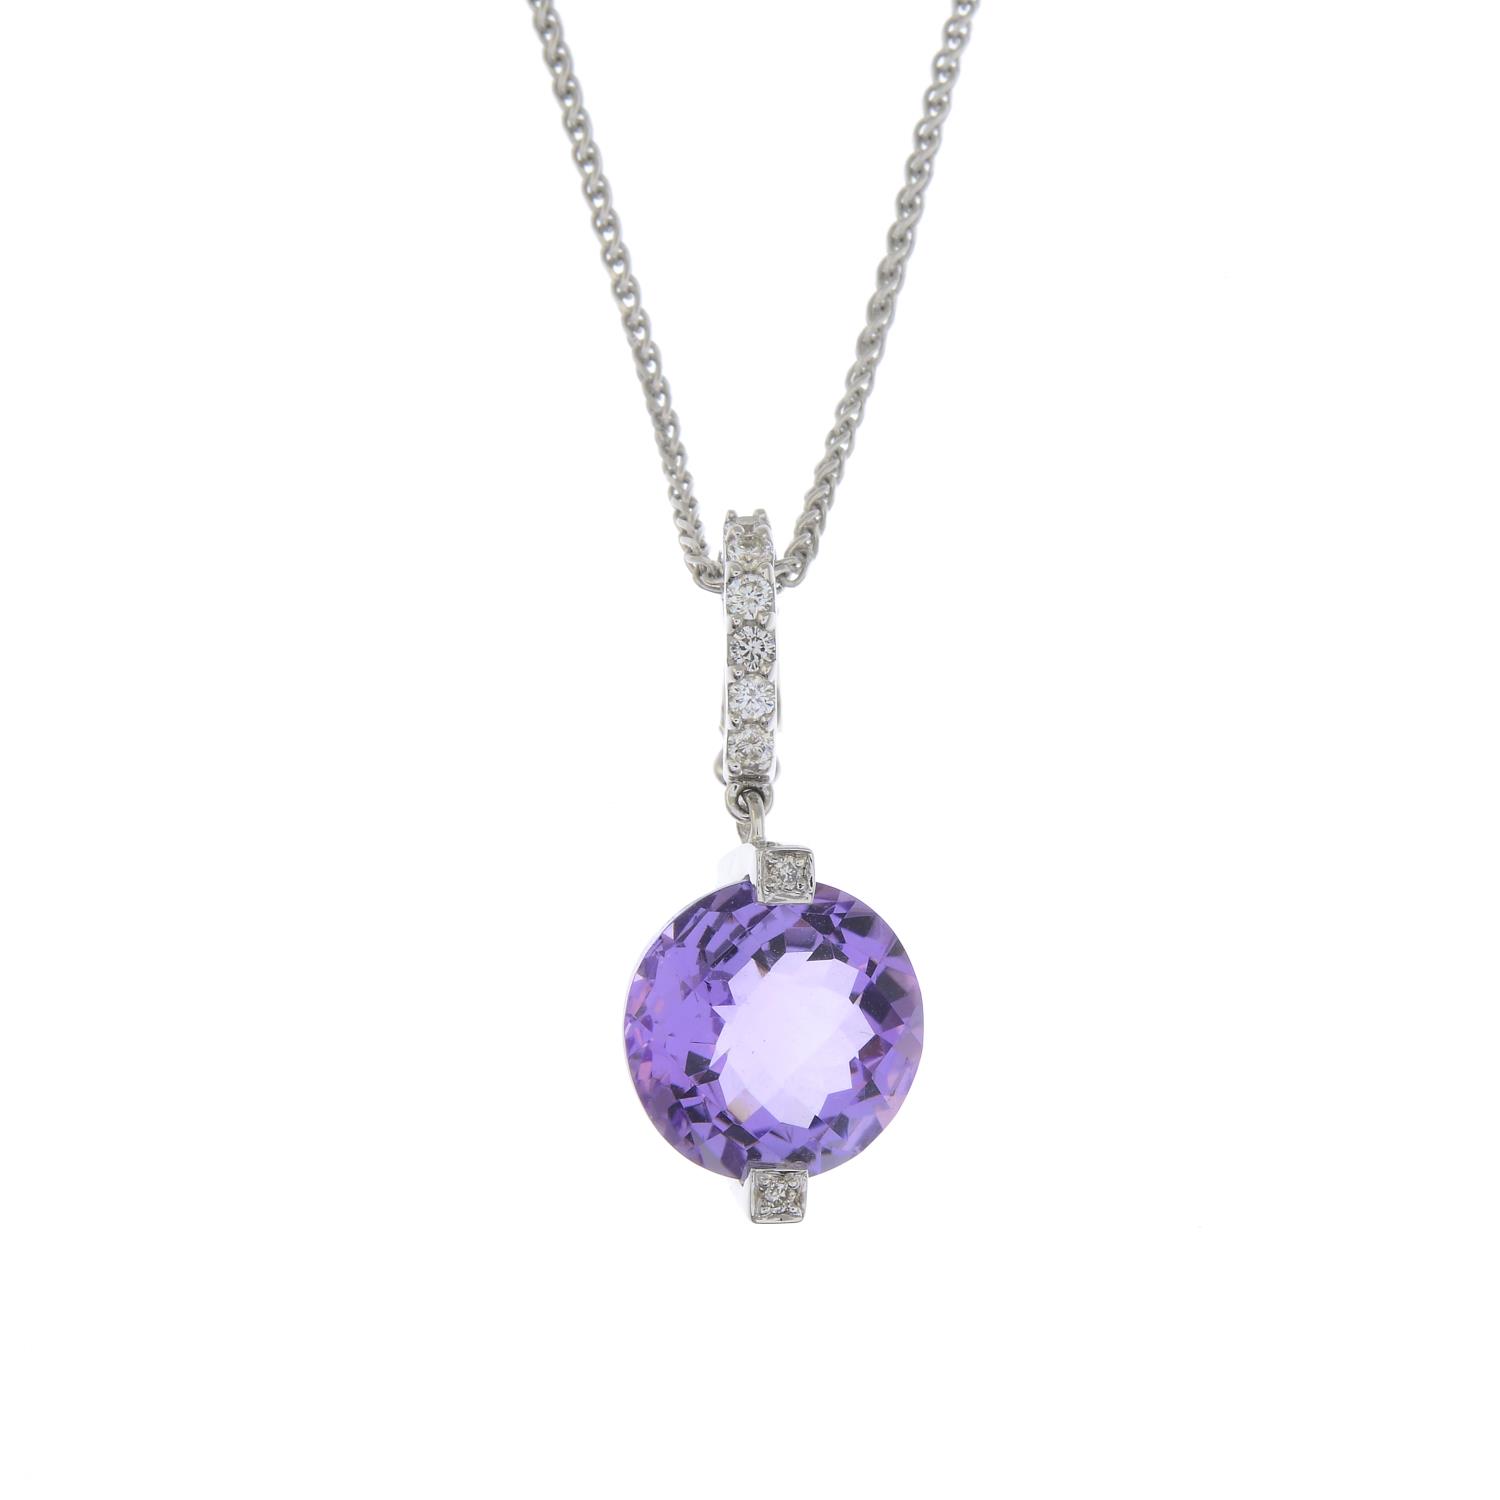 An amethyst and brilliant-cut diamond pendant,